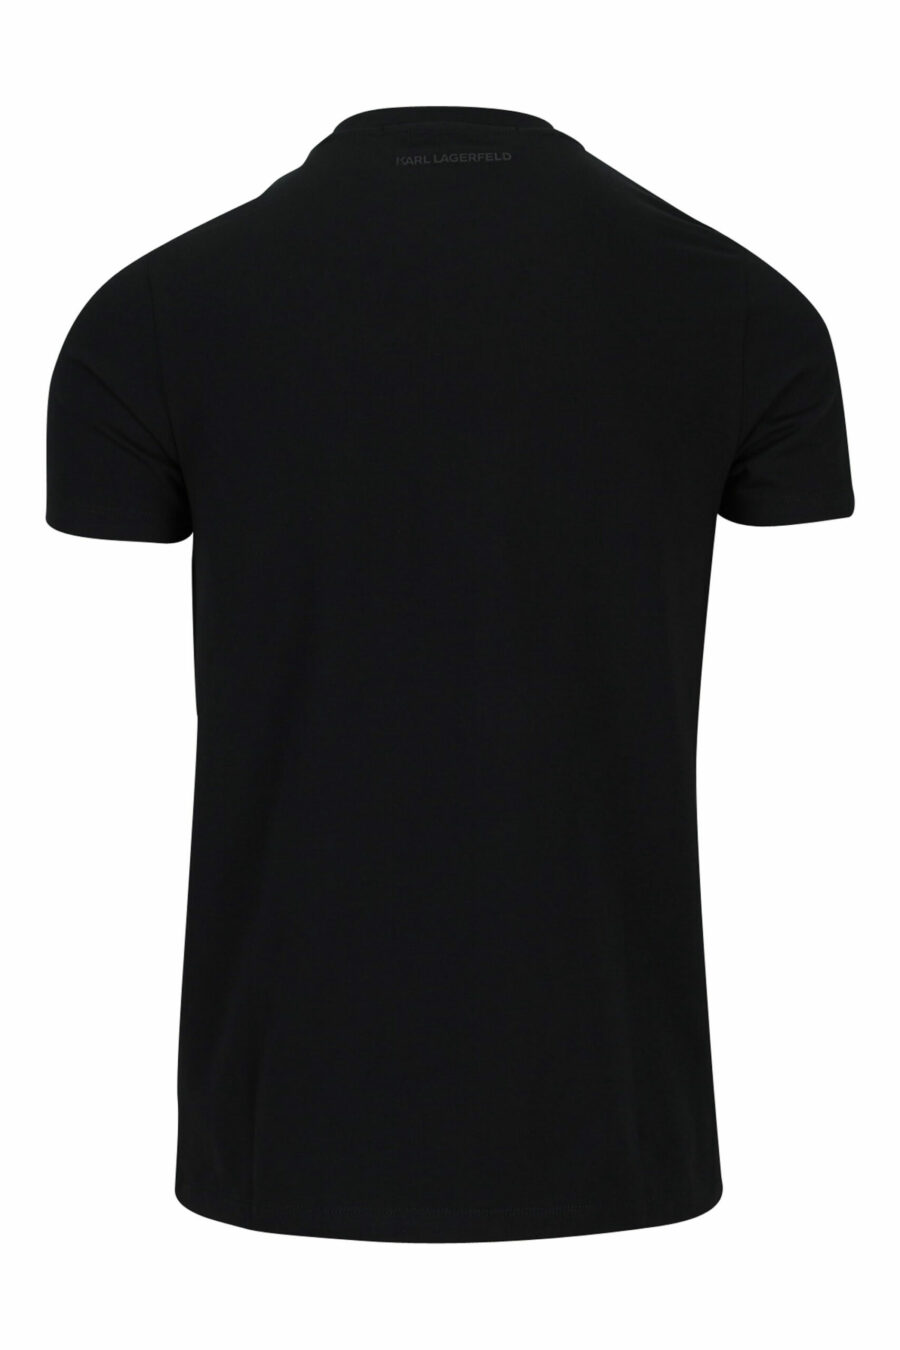 Schwarzes T-Shirt mit goldenem "karl" Maxilogo - 4062226681872 1 skaliert